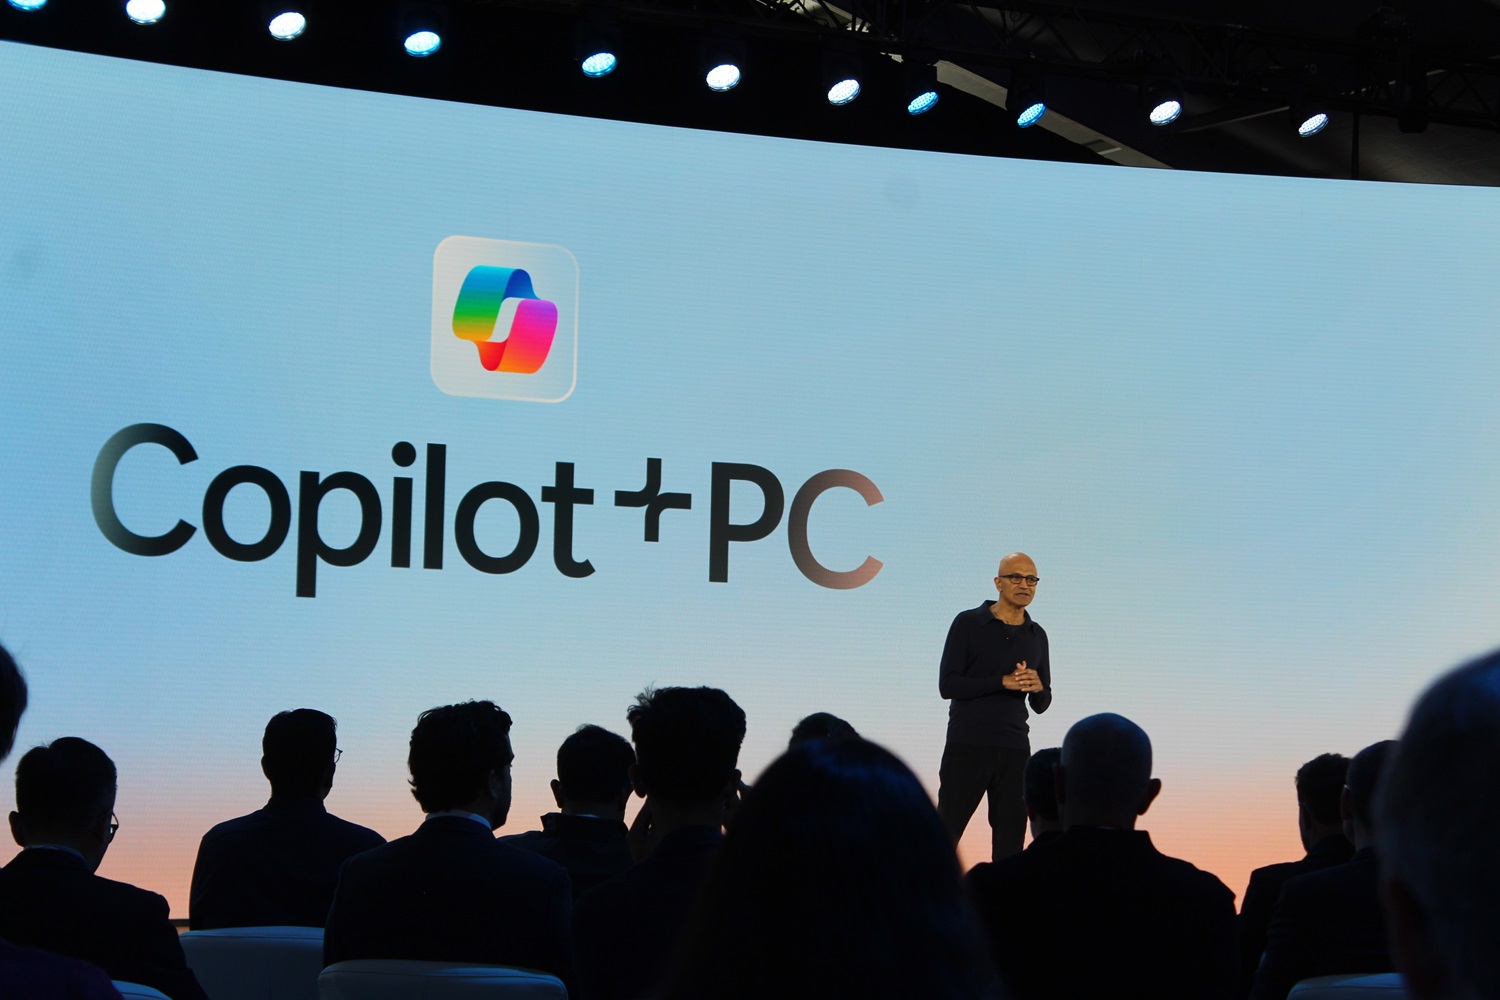 Microsoft's CEO introducing Copilot+.